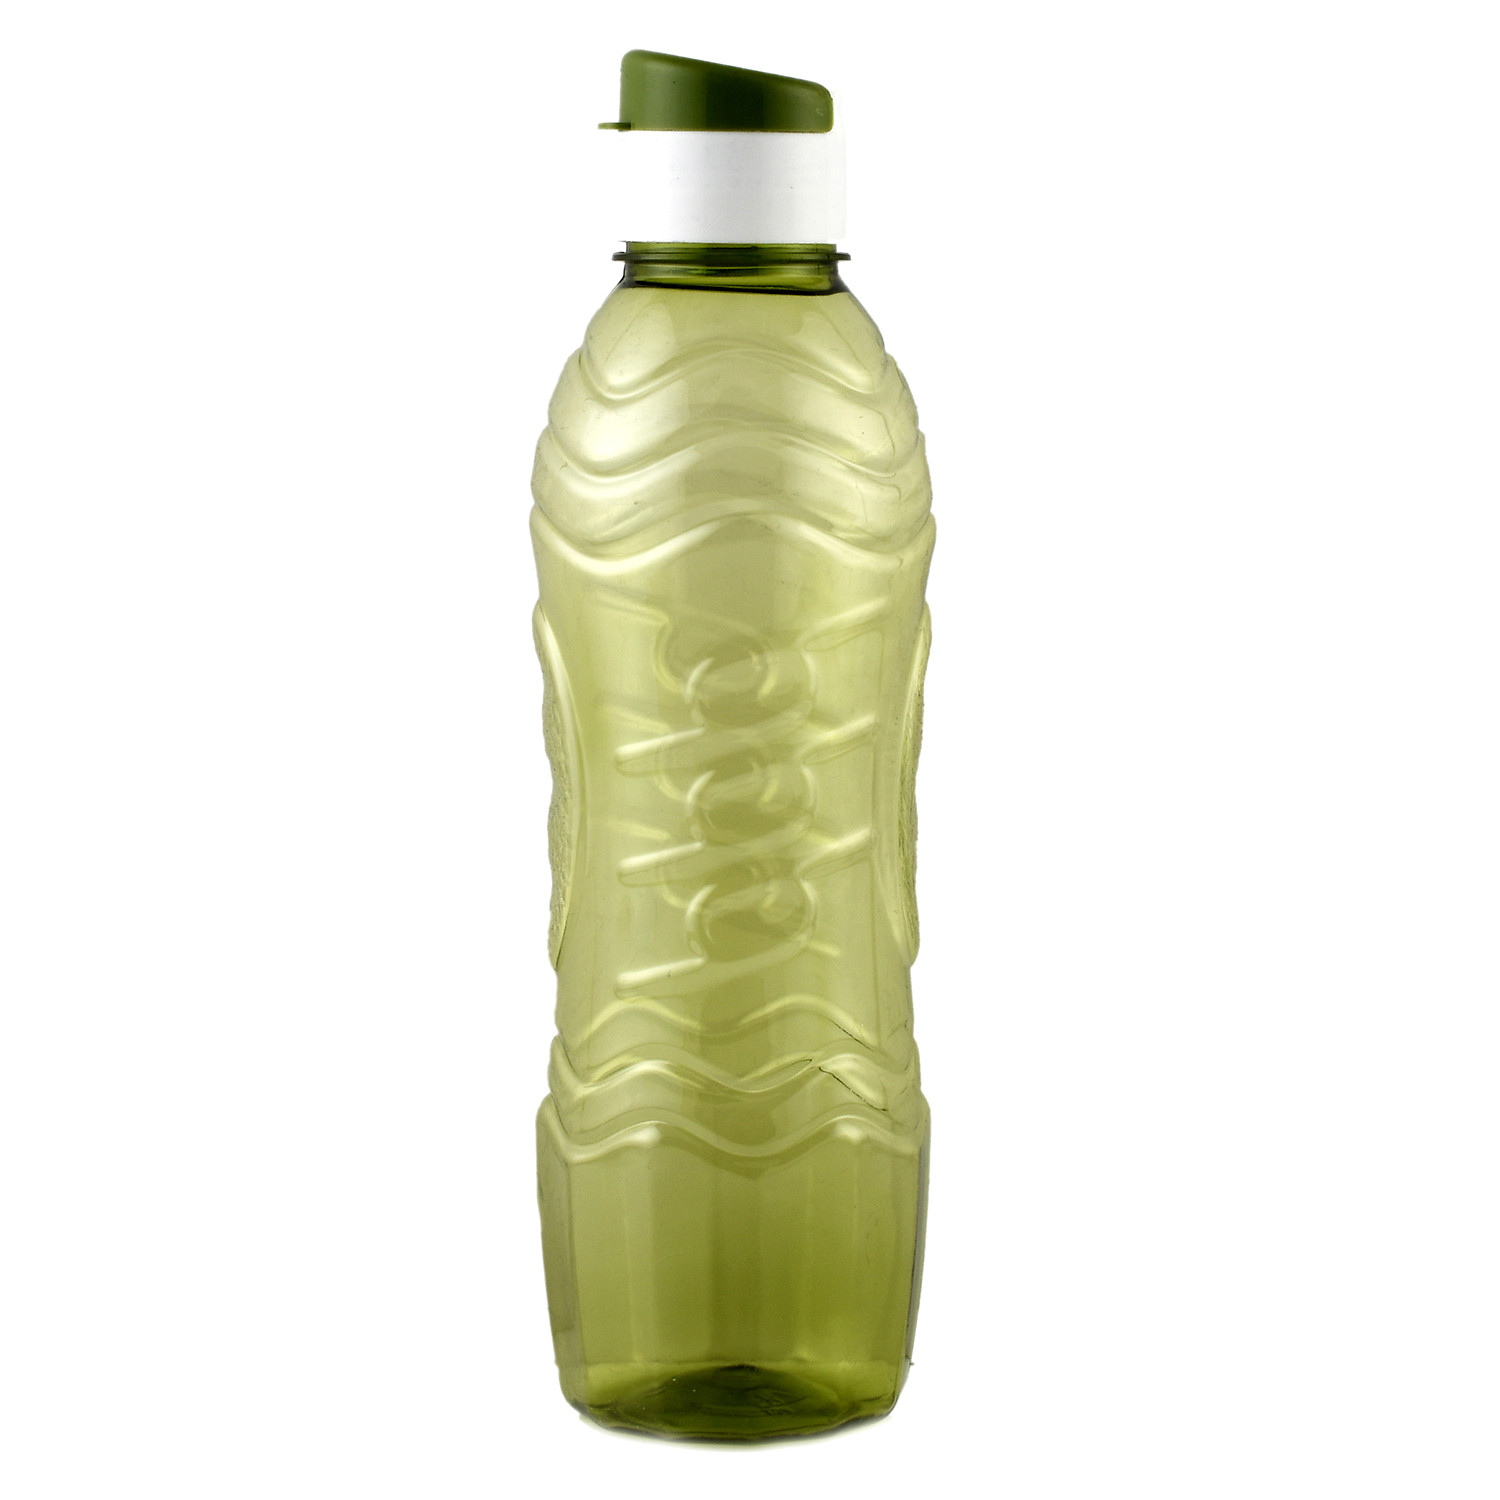 Kuber Industries Plastic Fridge Water Bottle Set with Flip Cap (1000ml, Green & Pink)-KUBMART1456